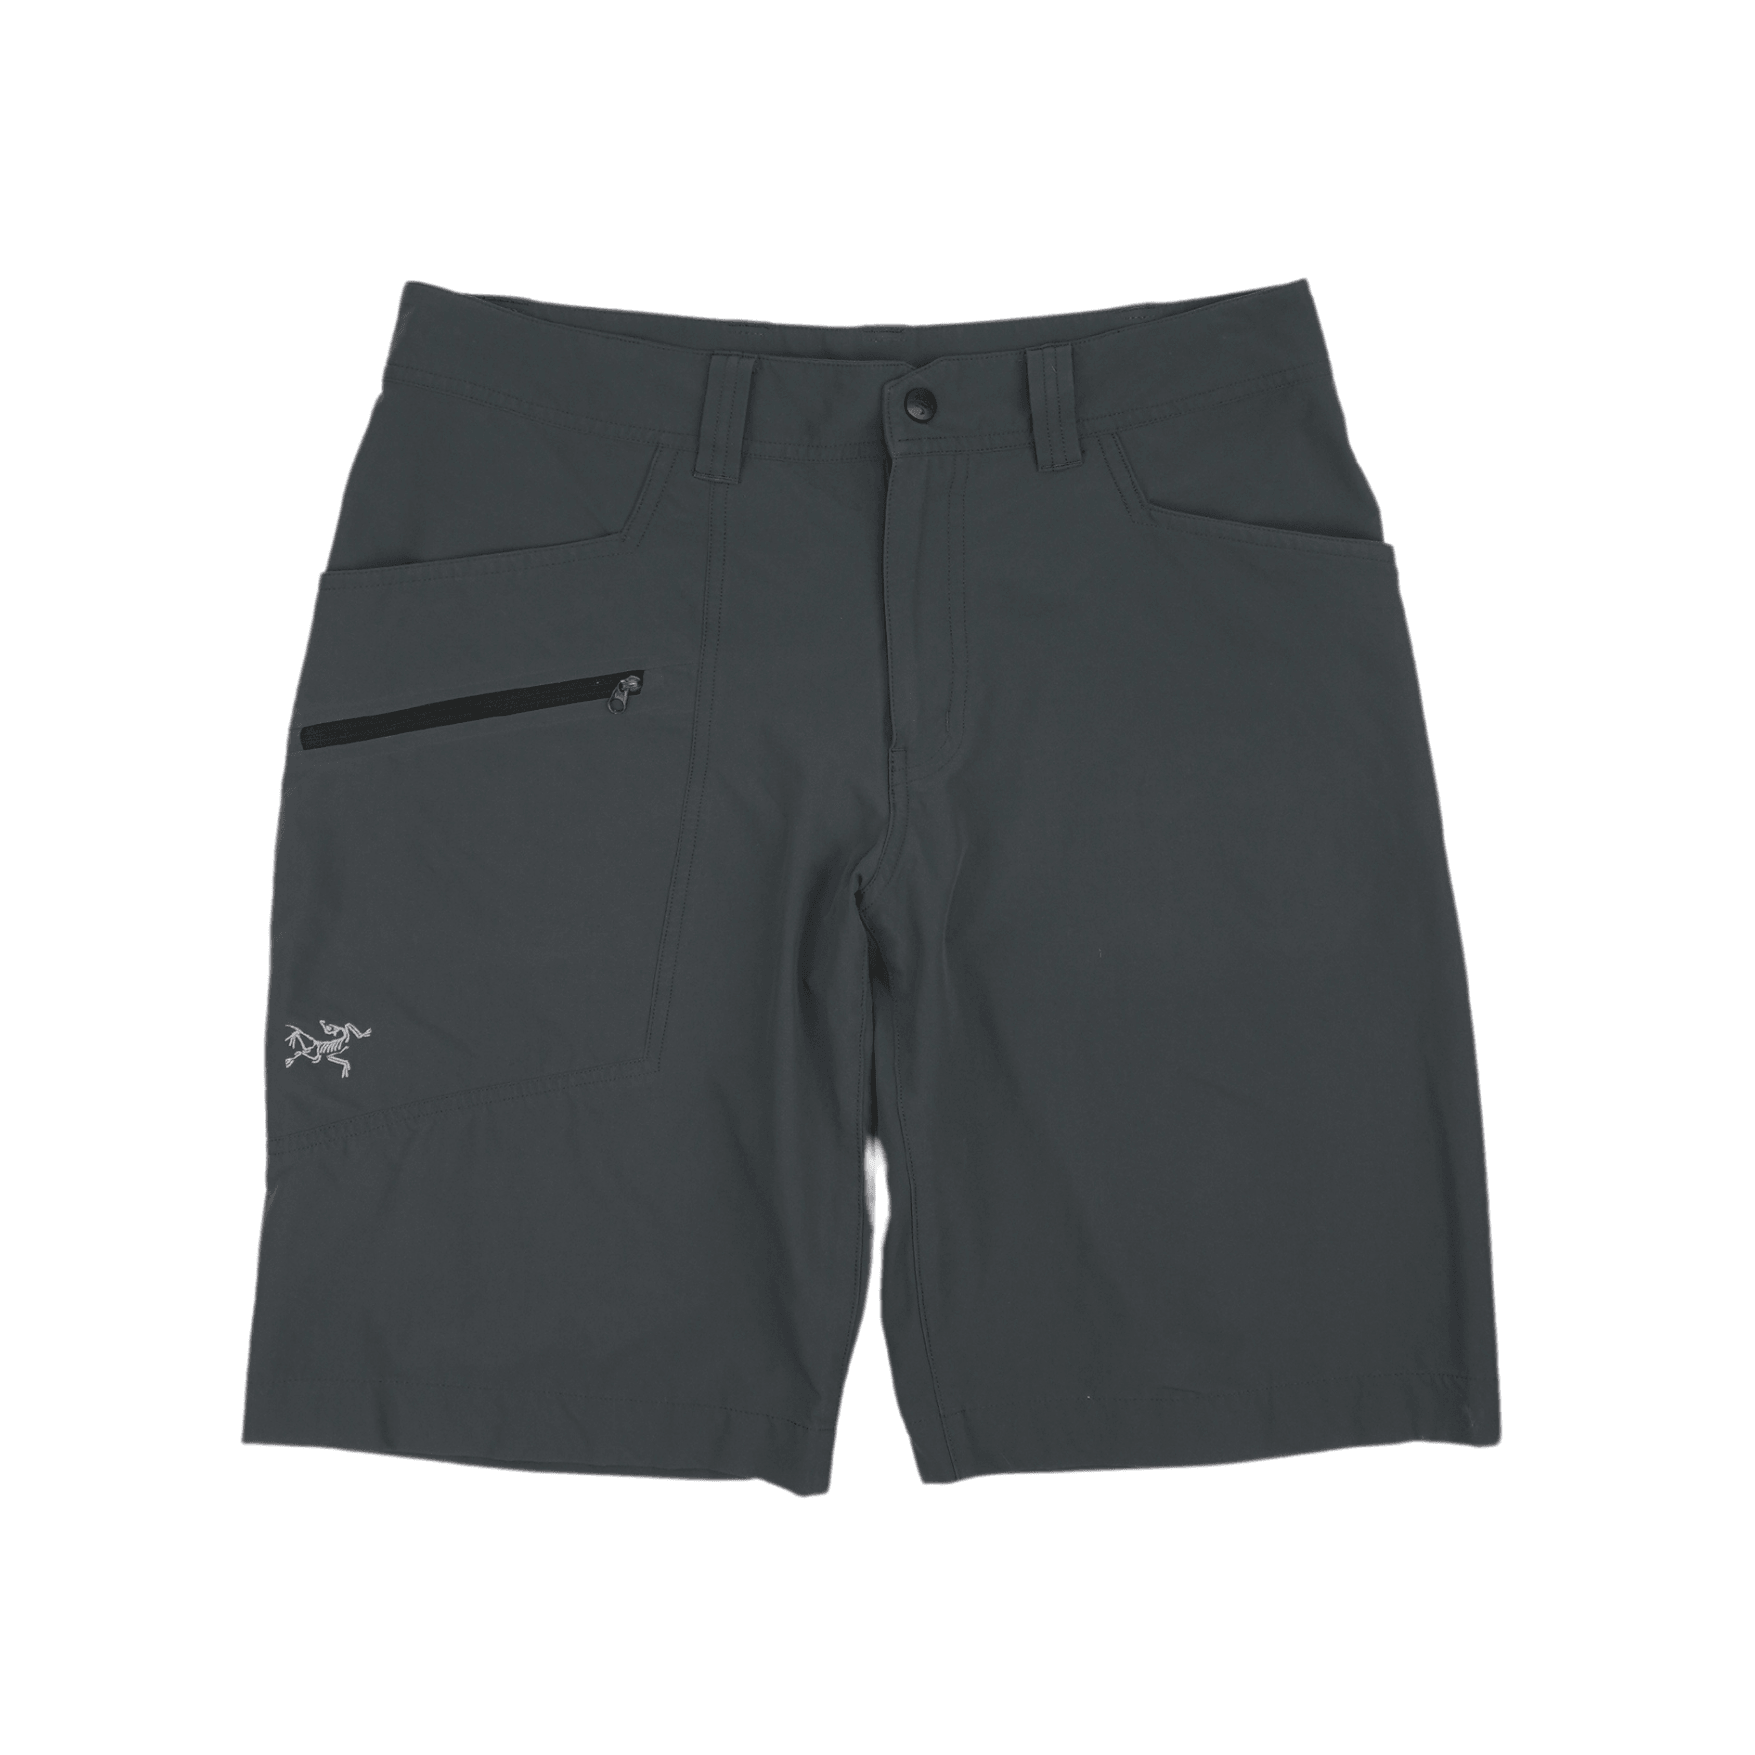 Arcteryx Shorts - Men's 32 - Fashionably Yours